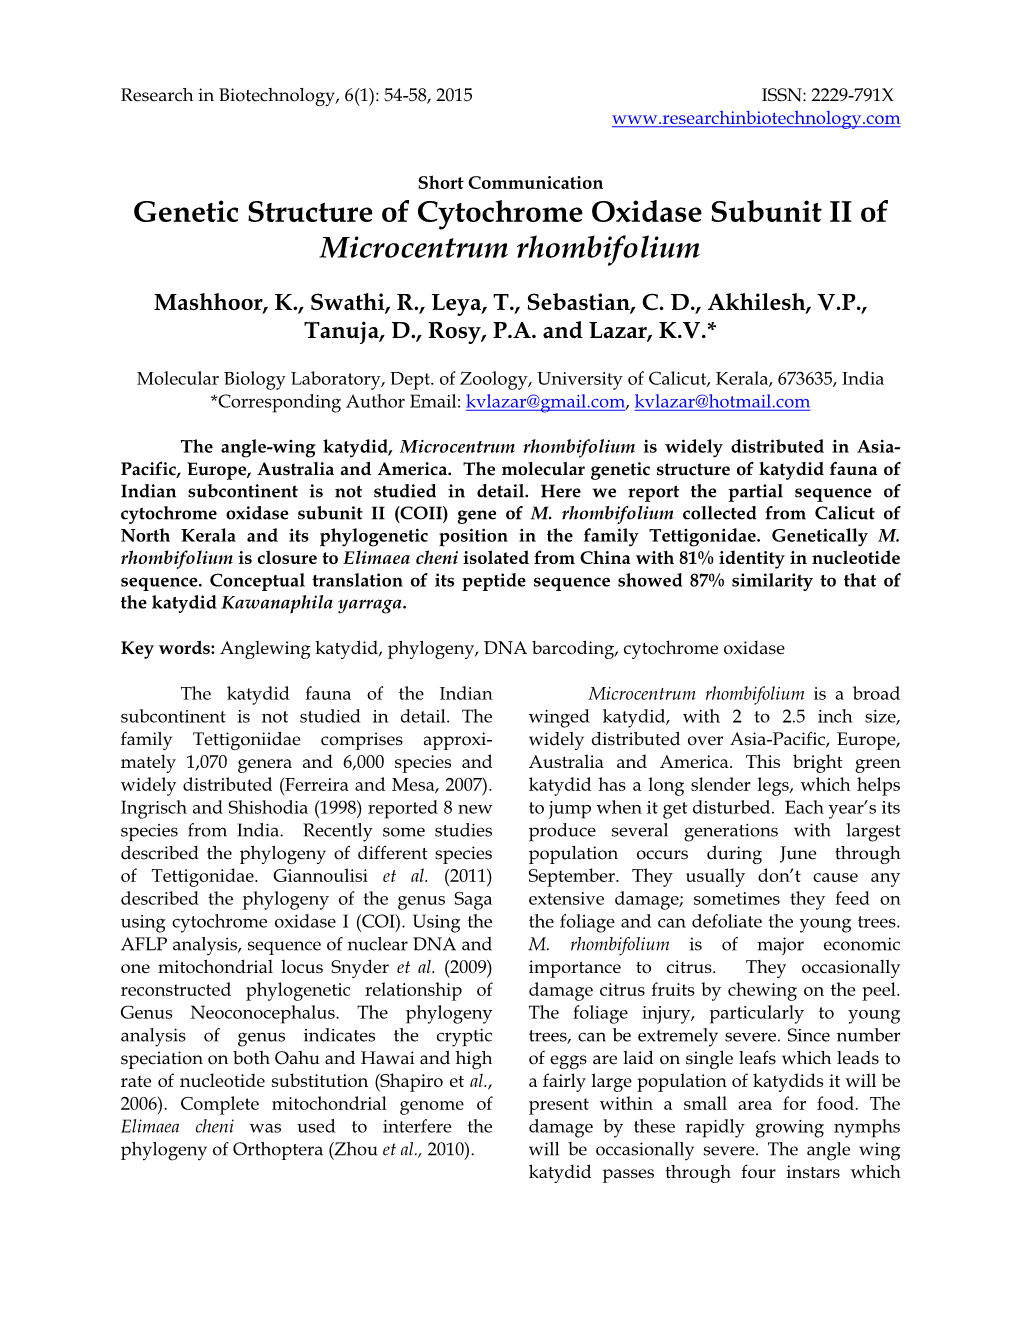 Genetic Structure of Cytochrome Oxidase Subunit II of Microcentrum Rhombifolium